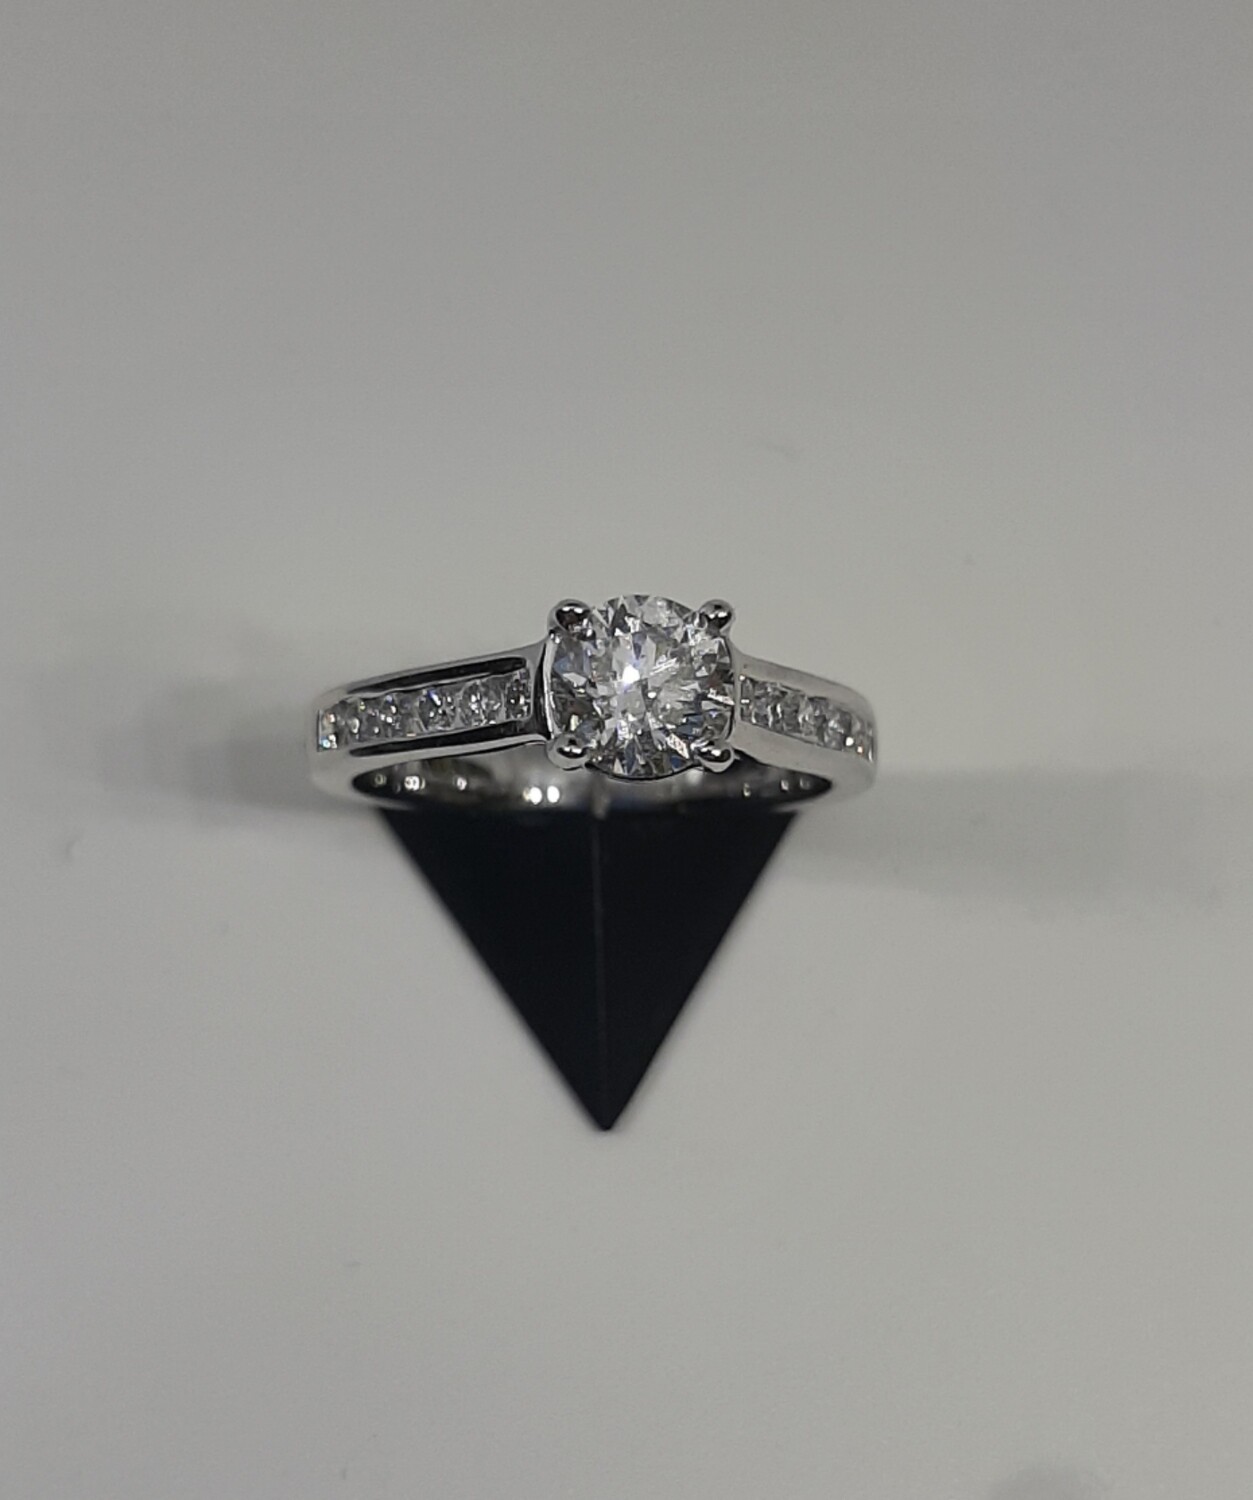 18ct White Gold Diamond Set Single Stone Ring with Diamond set Shoulders